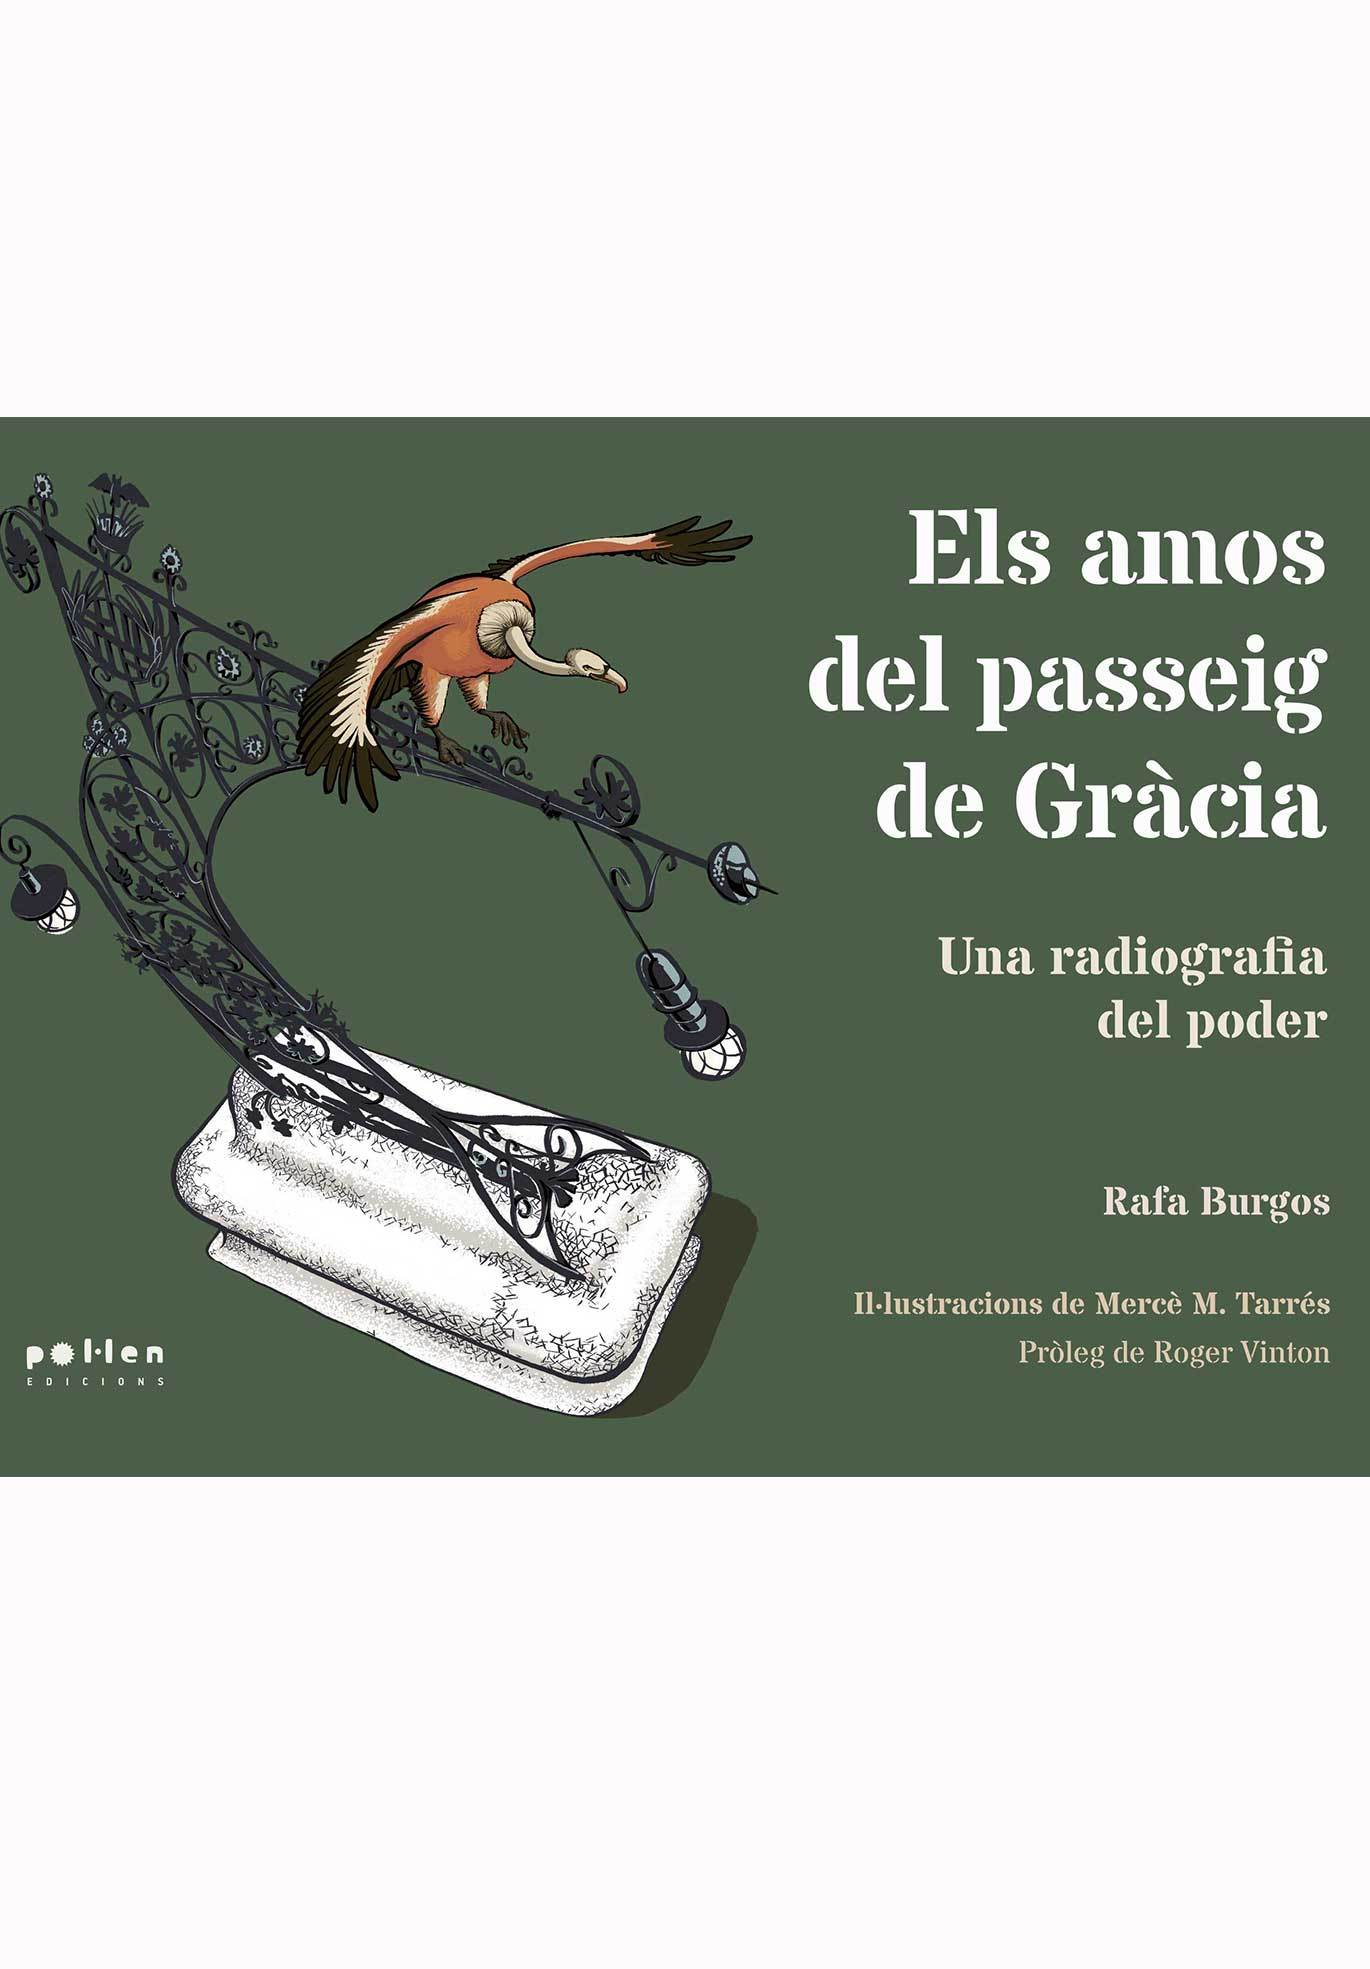 Rafa Burgos, 'Els amos del Passeig de Gràcia'. Pol·len, 245 p., 25 €.